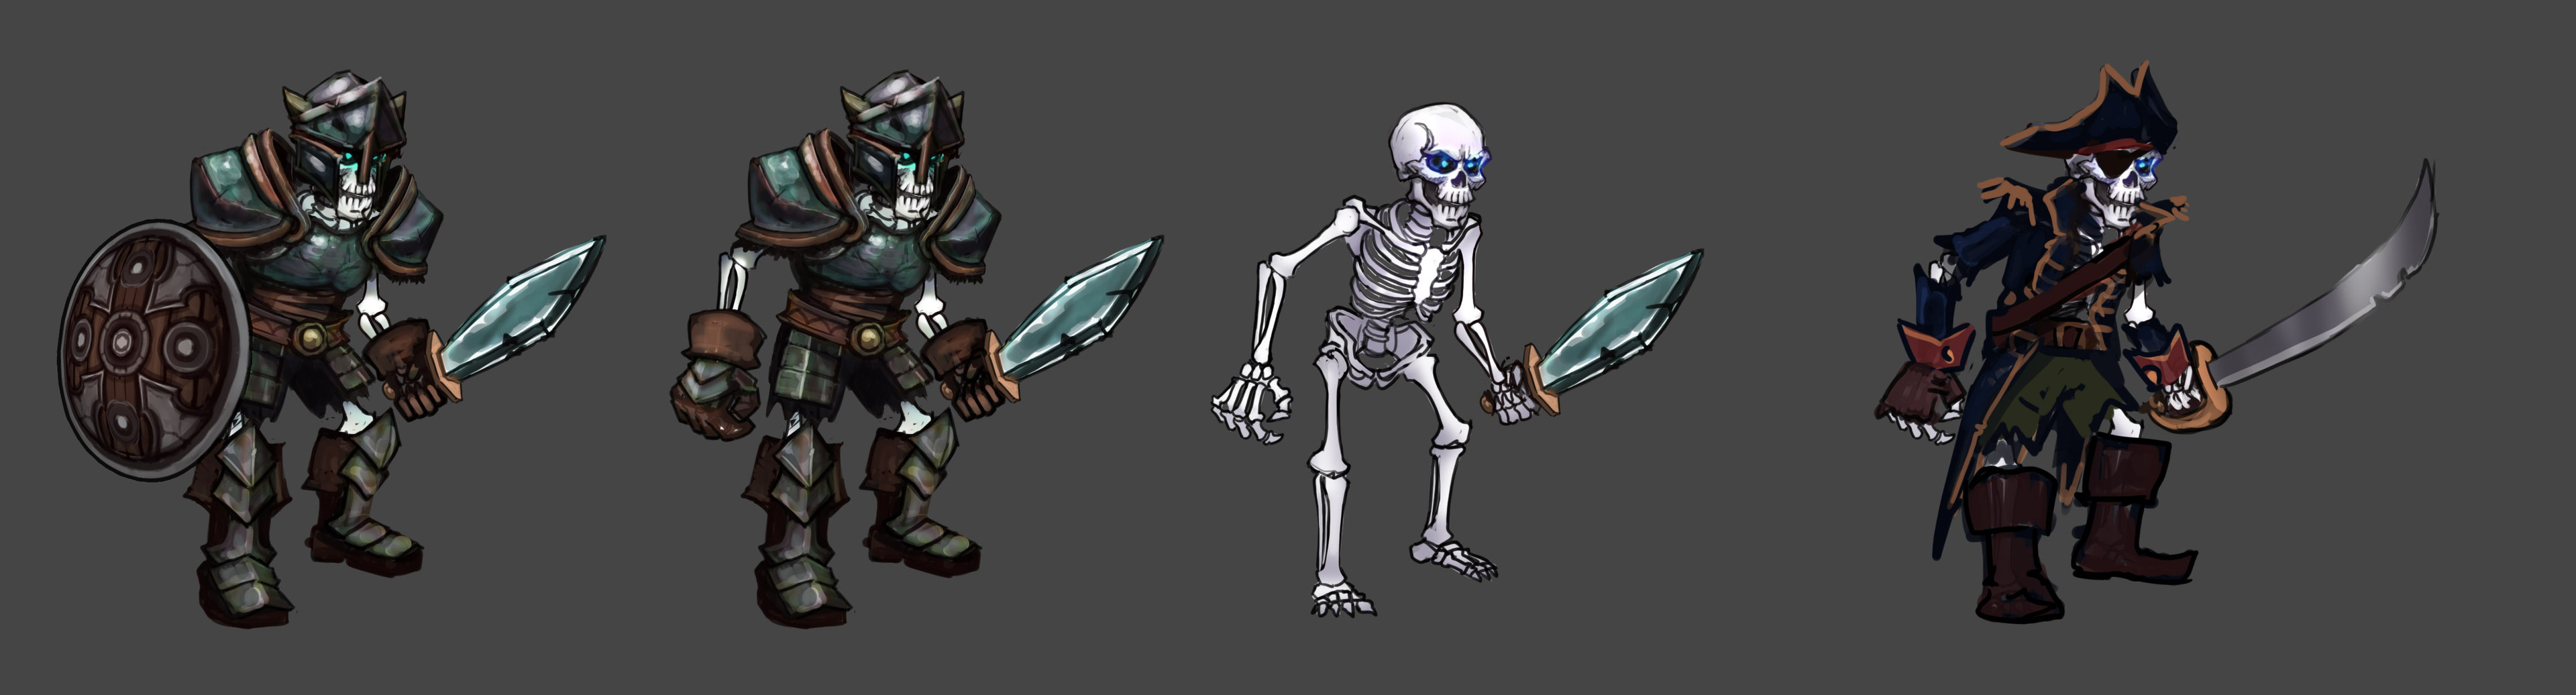 Skeleton concepts